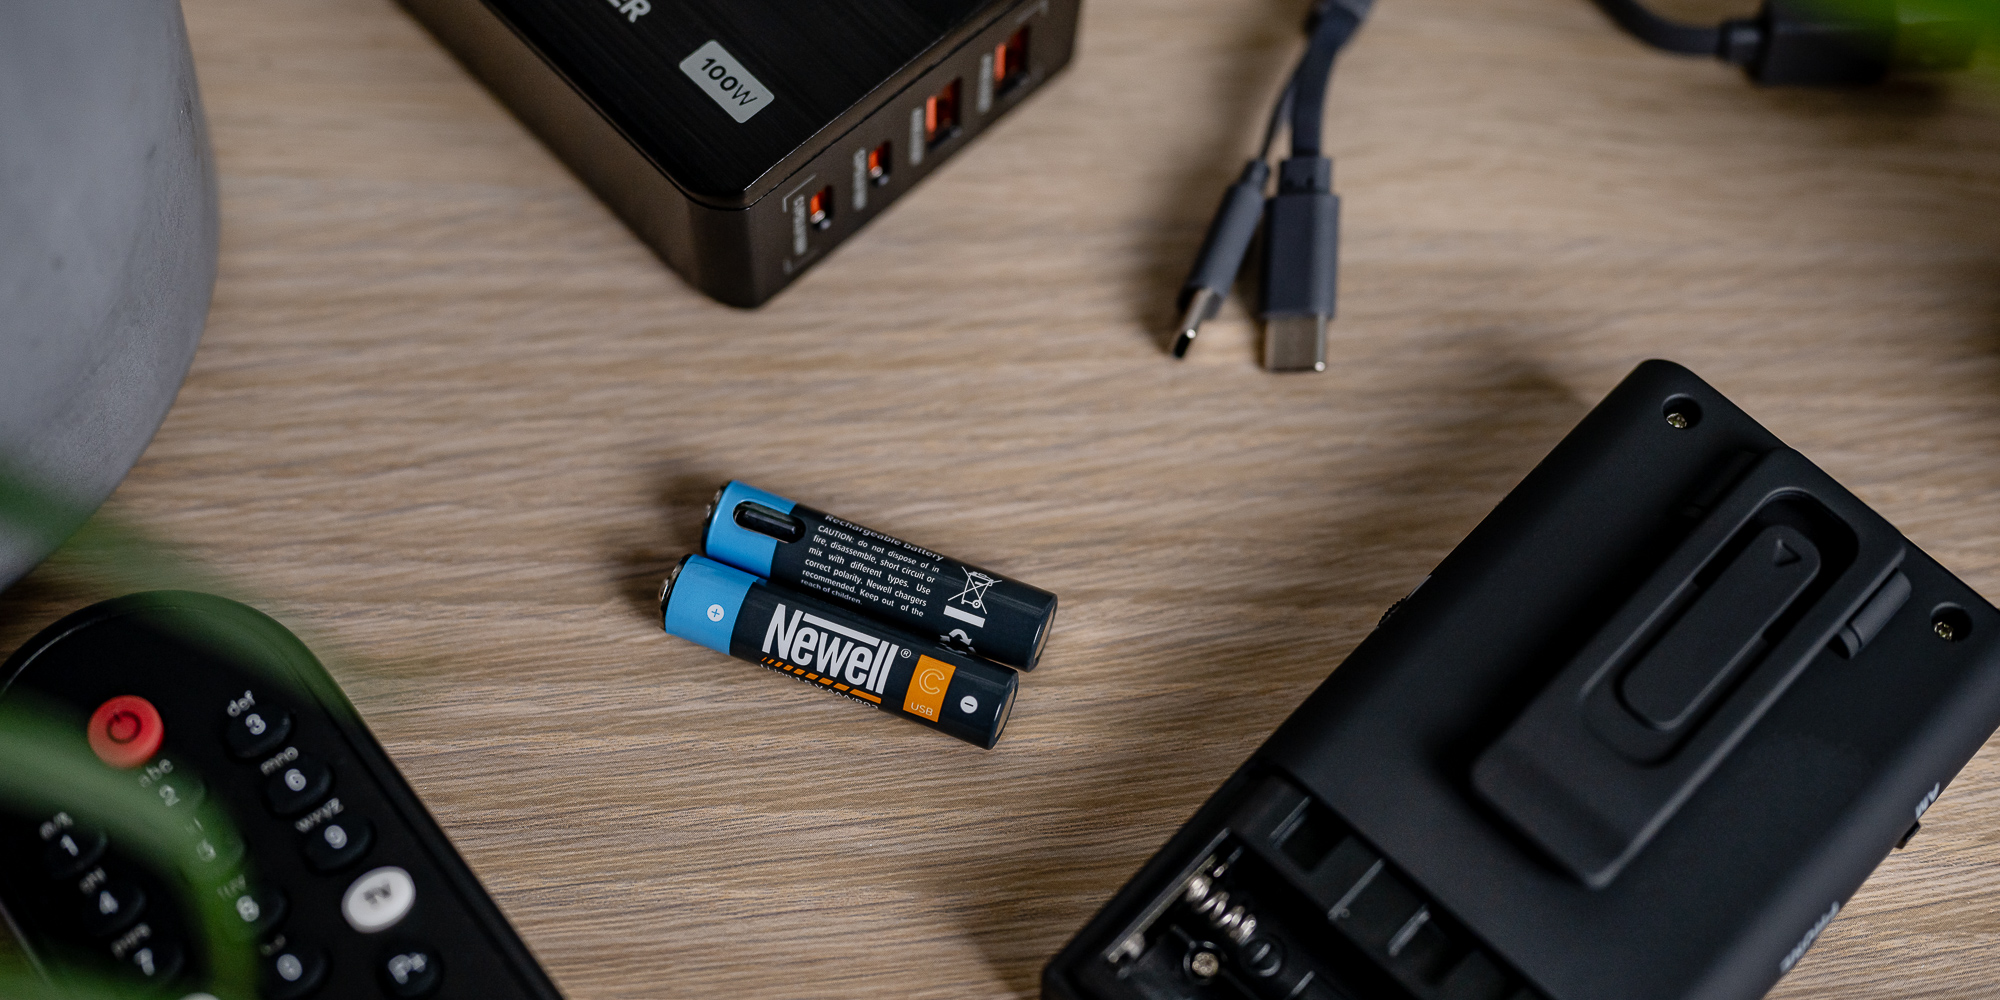 Akumulator Newell AAA USB-C 500 mAh 2 szt. blisterr